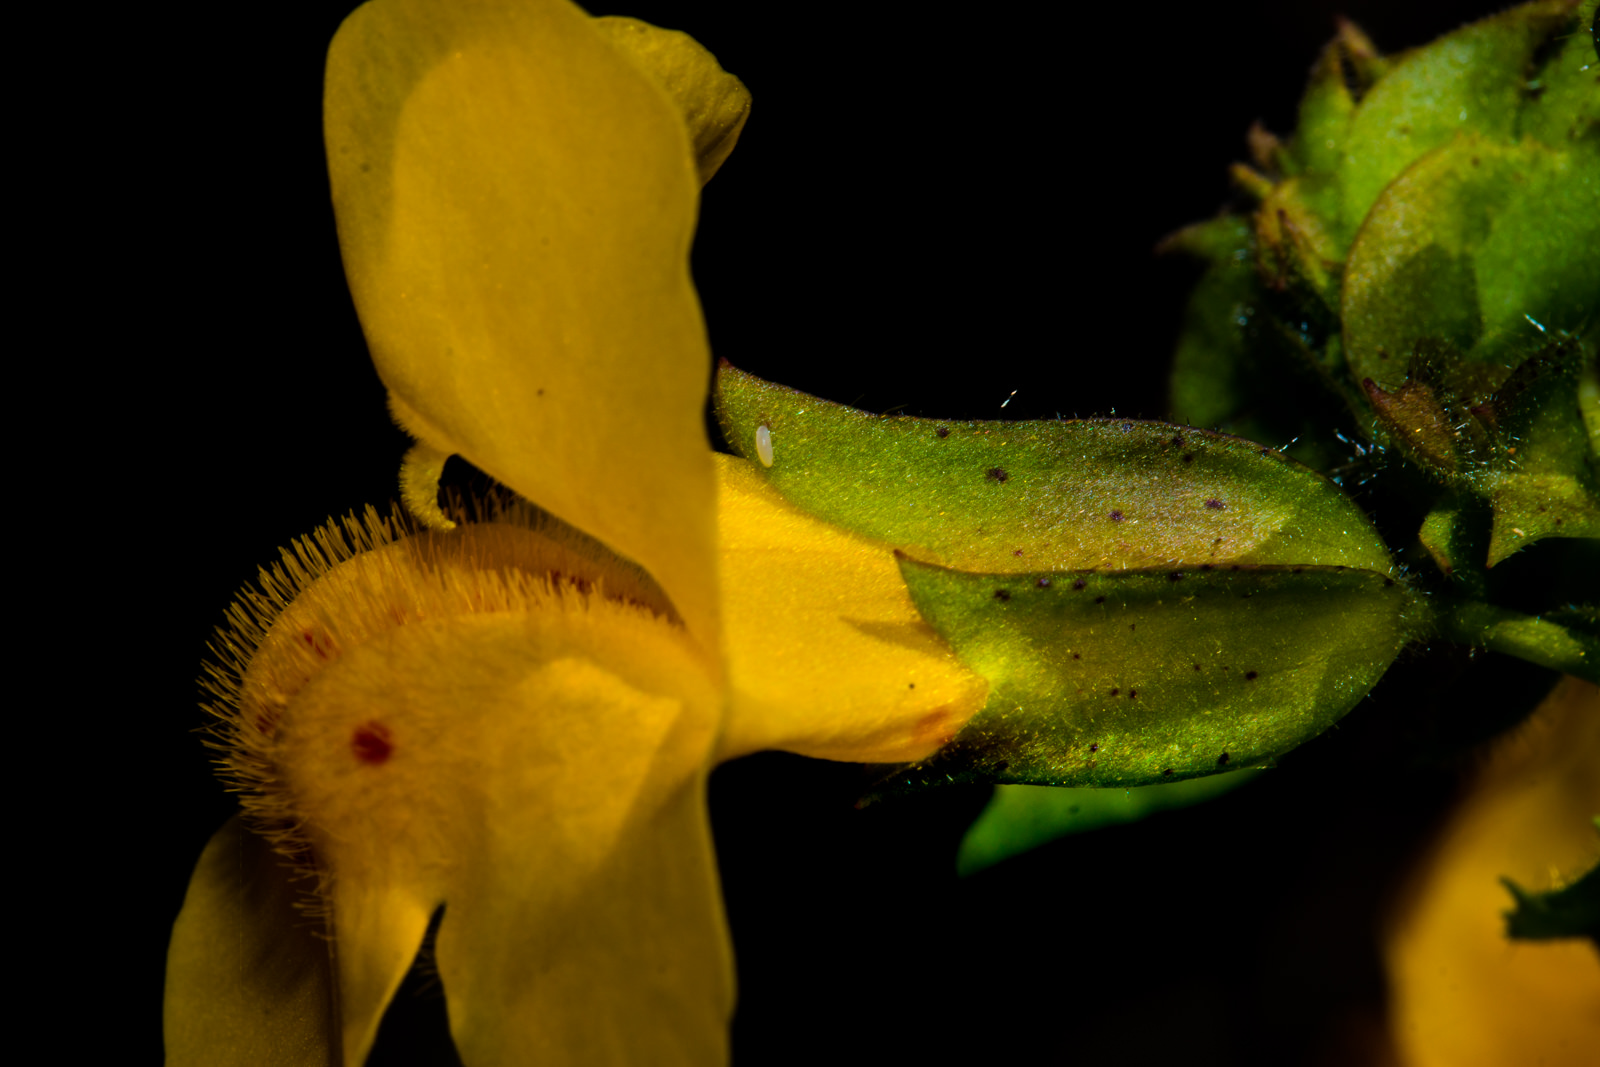  Creek Monkey Flower - <em>Erythranthe guttata</em>